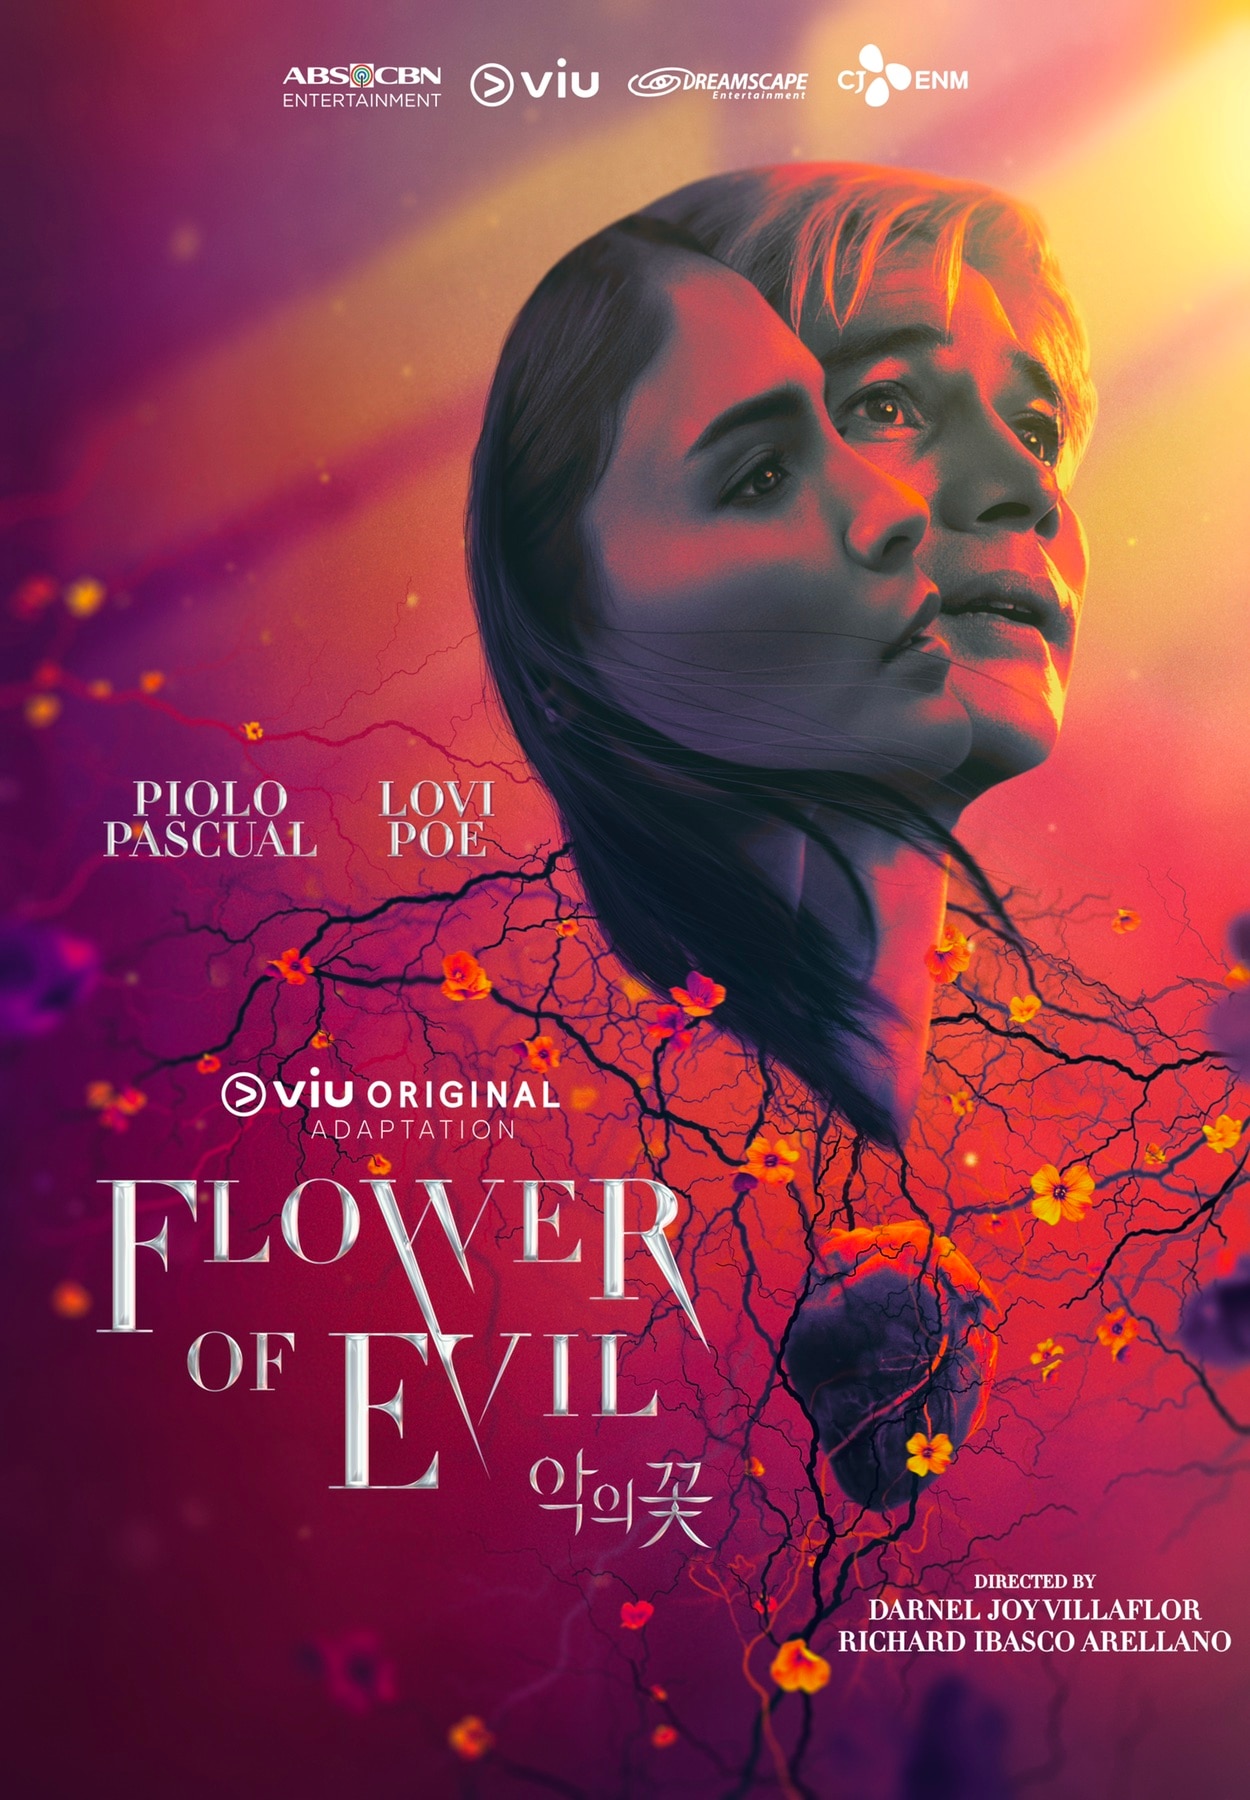 Flower of Evil official poster